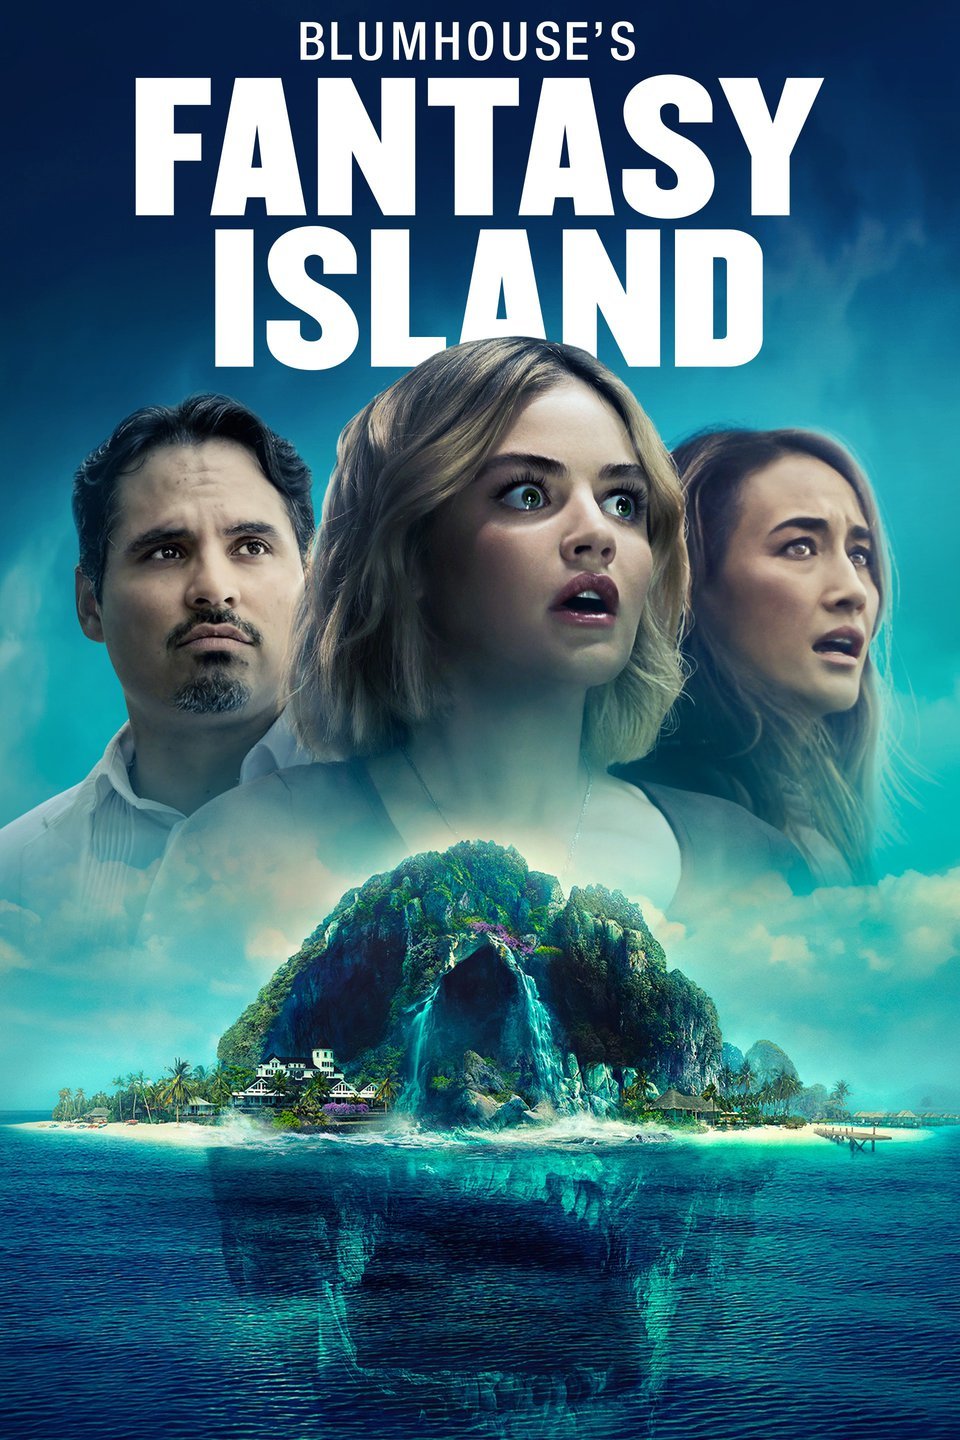 [MINI Super-HQ] Fantasy Island (2020) เกาะสวรรค์ เกมนรก [พากย์อังกฤษ DTS] [Soundtrack บรรยายไทย + อังกฤษ] [เสียงอังกฤษ + ซับไทย] [PANDAFILE]